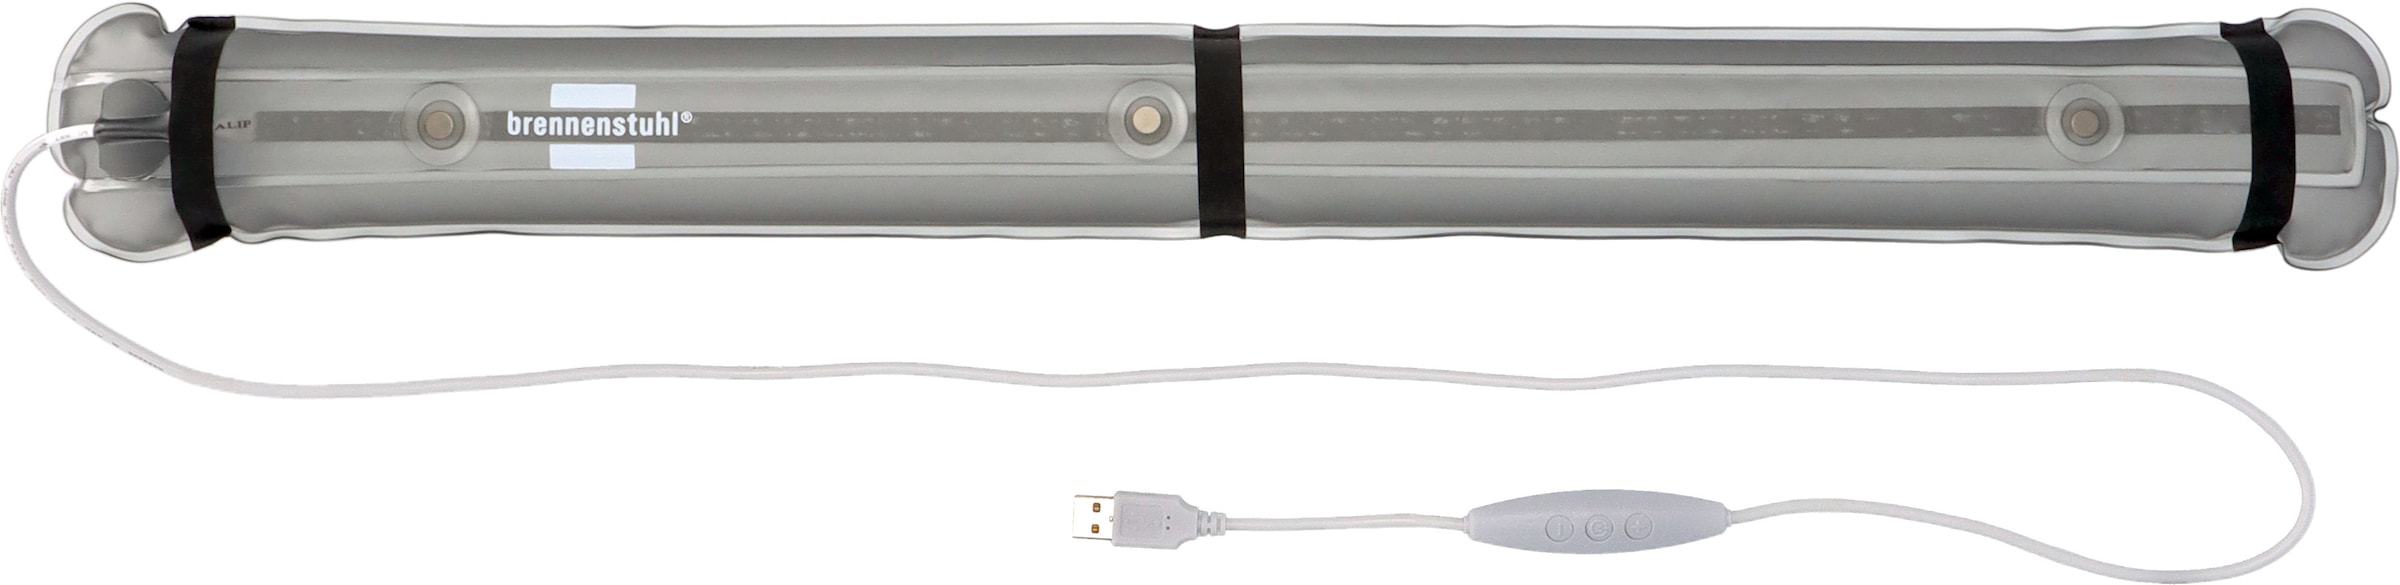 Air Gartenleuchte »OLI BAUR Brennenstuhl LED 1«, Kabel mit USB stufenlos aufblasbar, Röhre dimmbar, | faltbare 1m LED